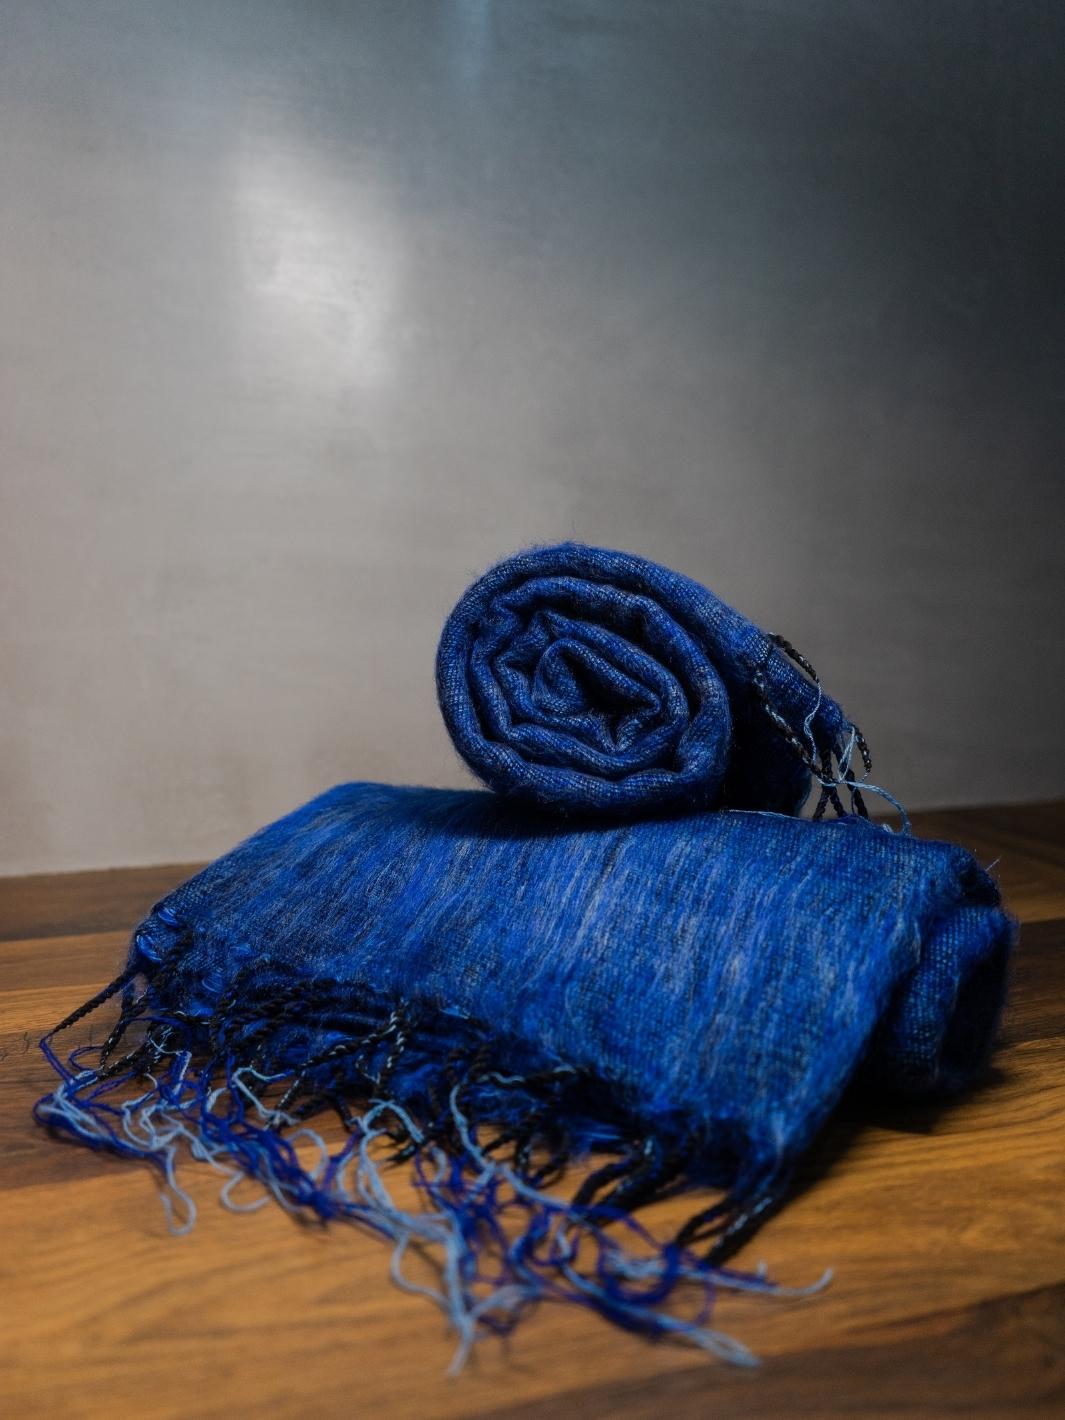 Handwoven yak wool maxi scarf - blue